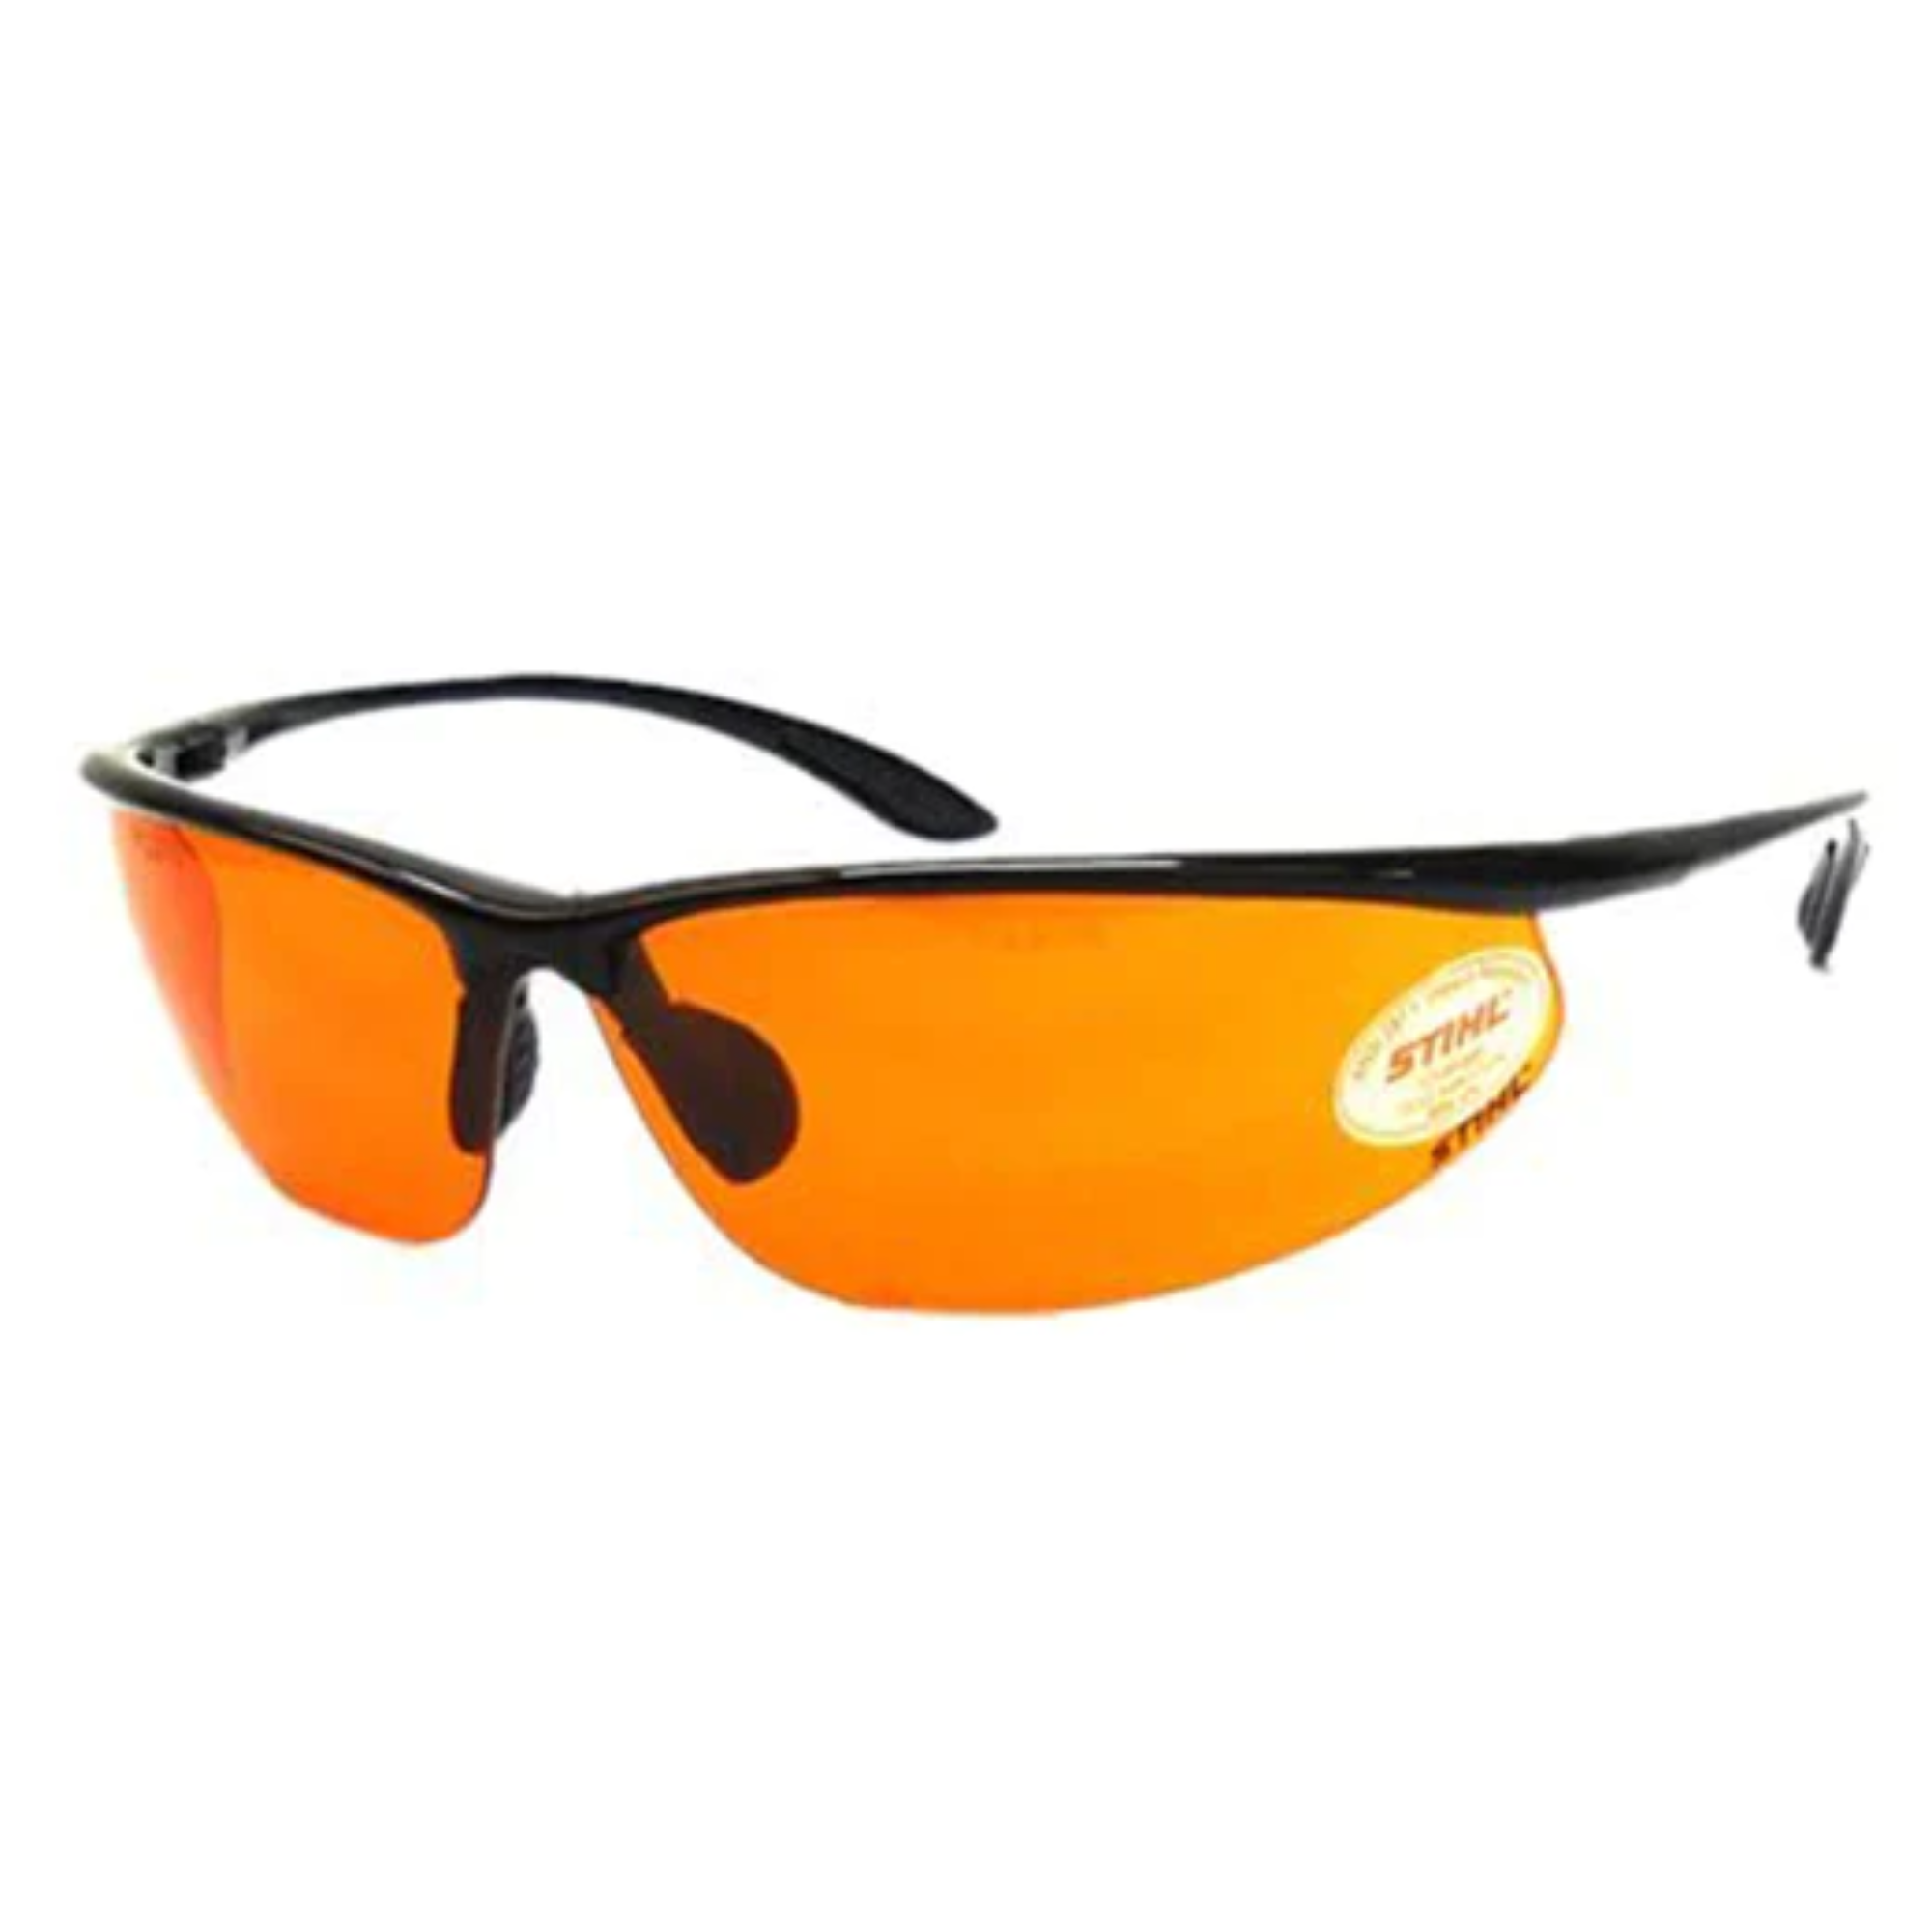 Stihl Sleek Line Glasses | Orange Lens | 7010 884 0324